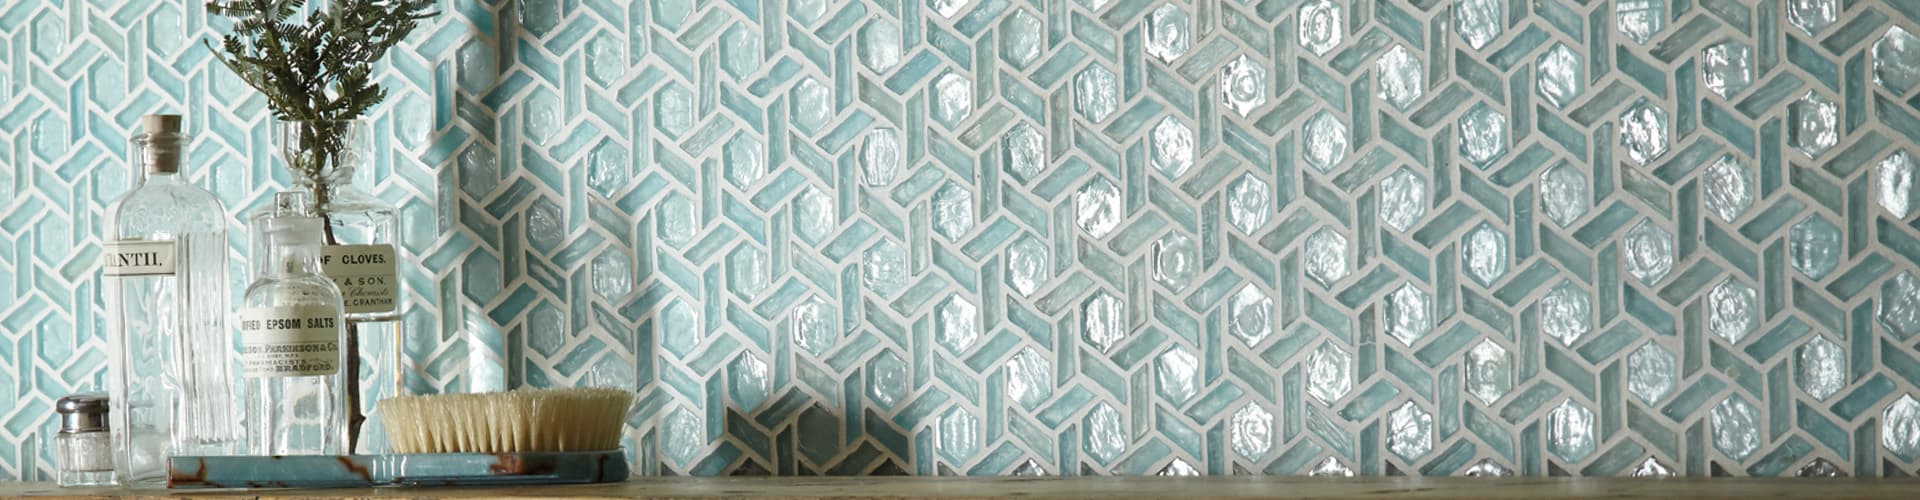 Mosaic Bathroom Tiles